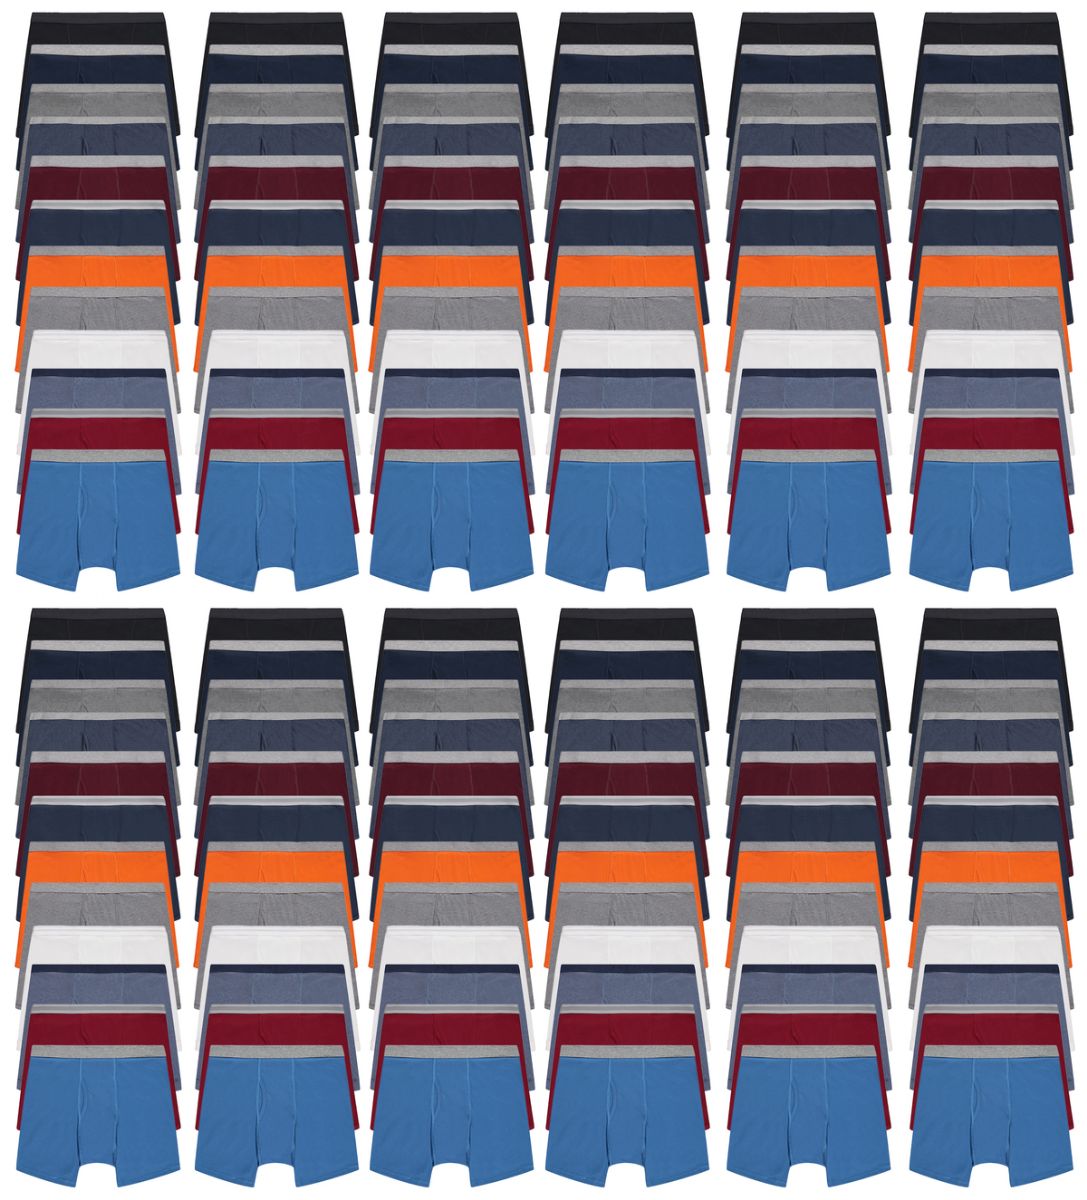 144 Pieces of Mens 100% Cotton Boxer Briefs Underwear Assorted Colors, Size 2X-Large, 144 Pack